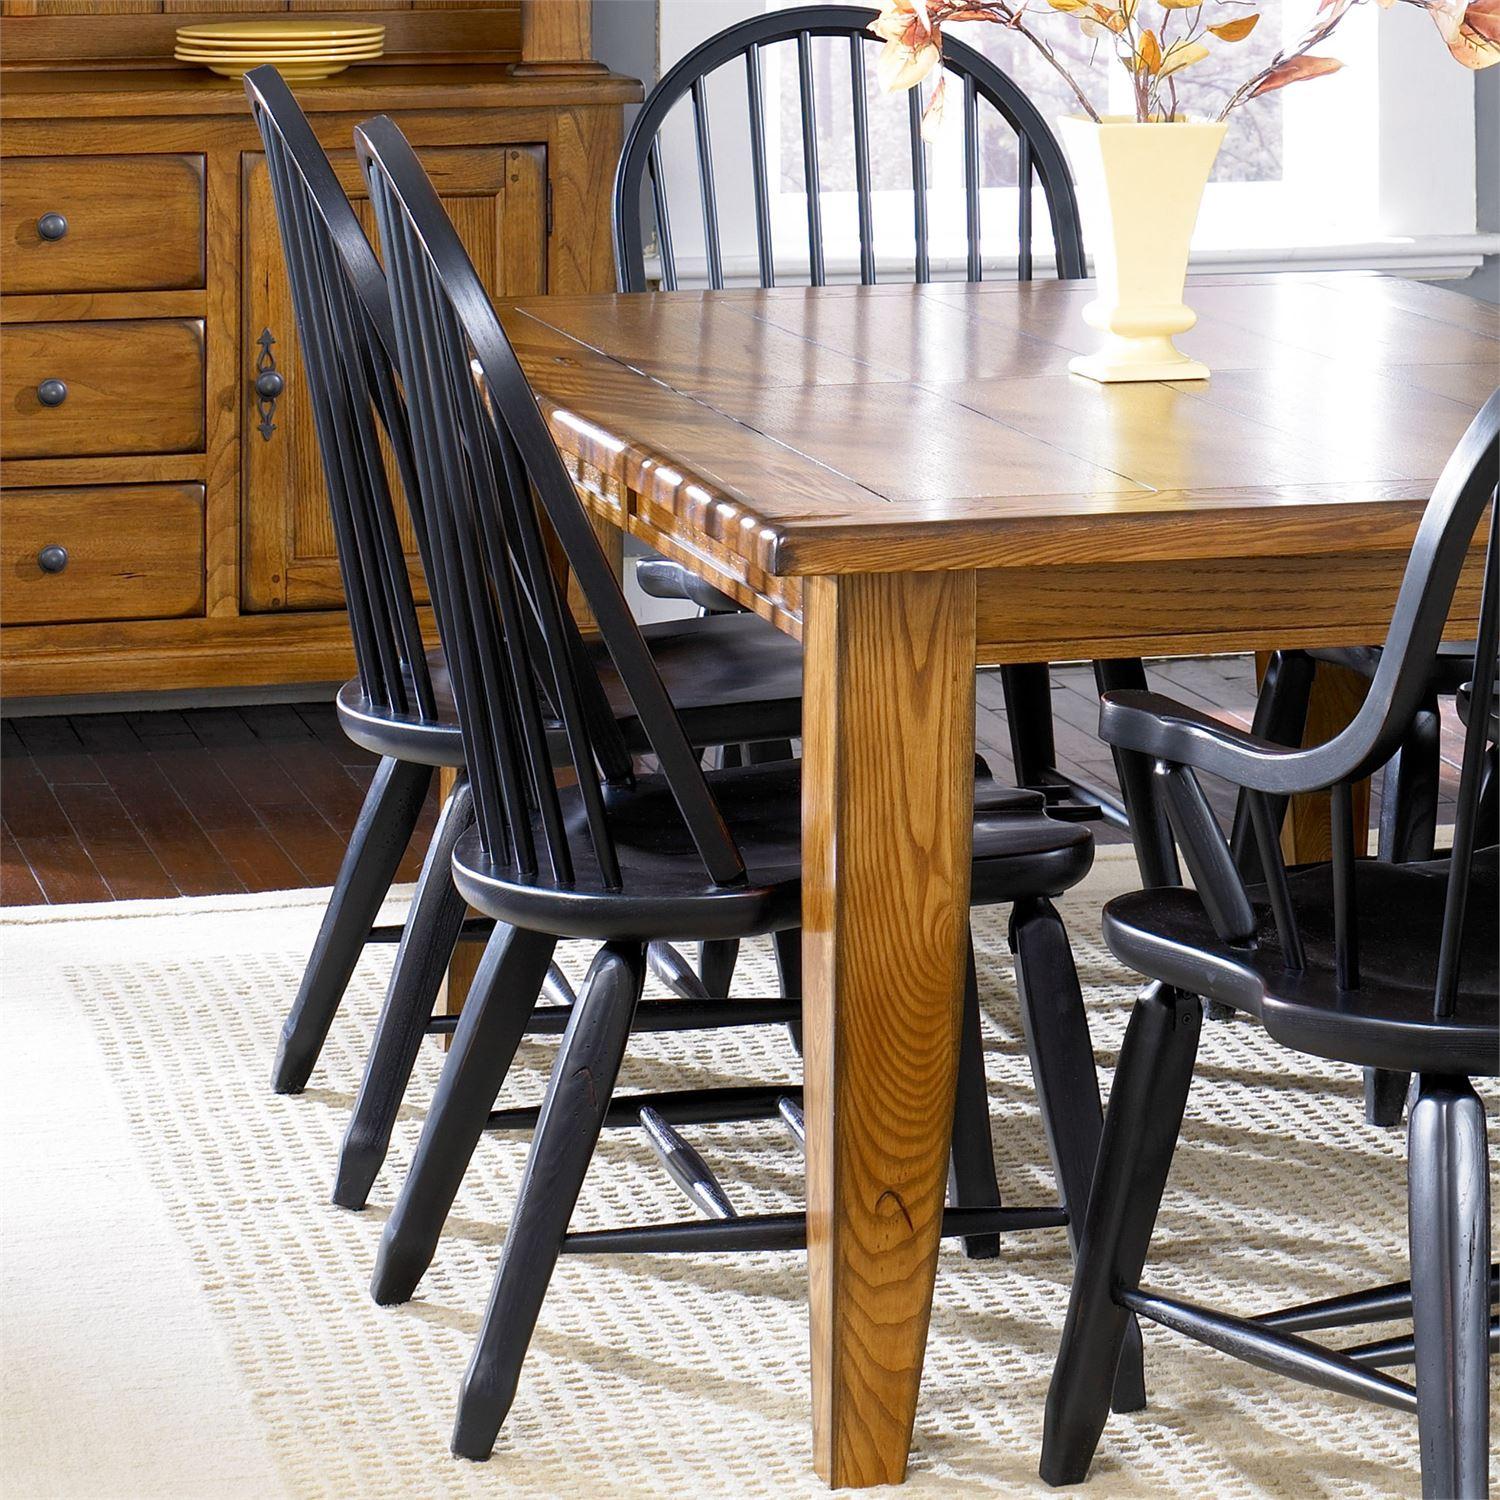 

    
Black Rustic Oak Finish Dining Side Chair 17-C4050 Liberty Furniture
